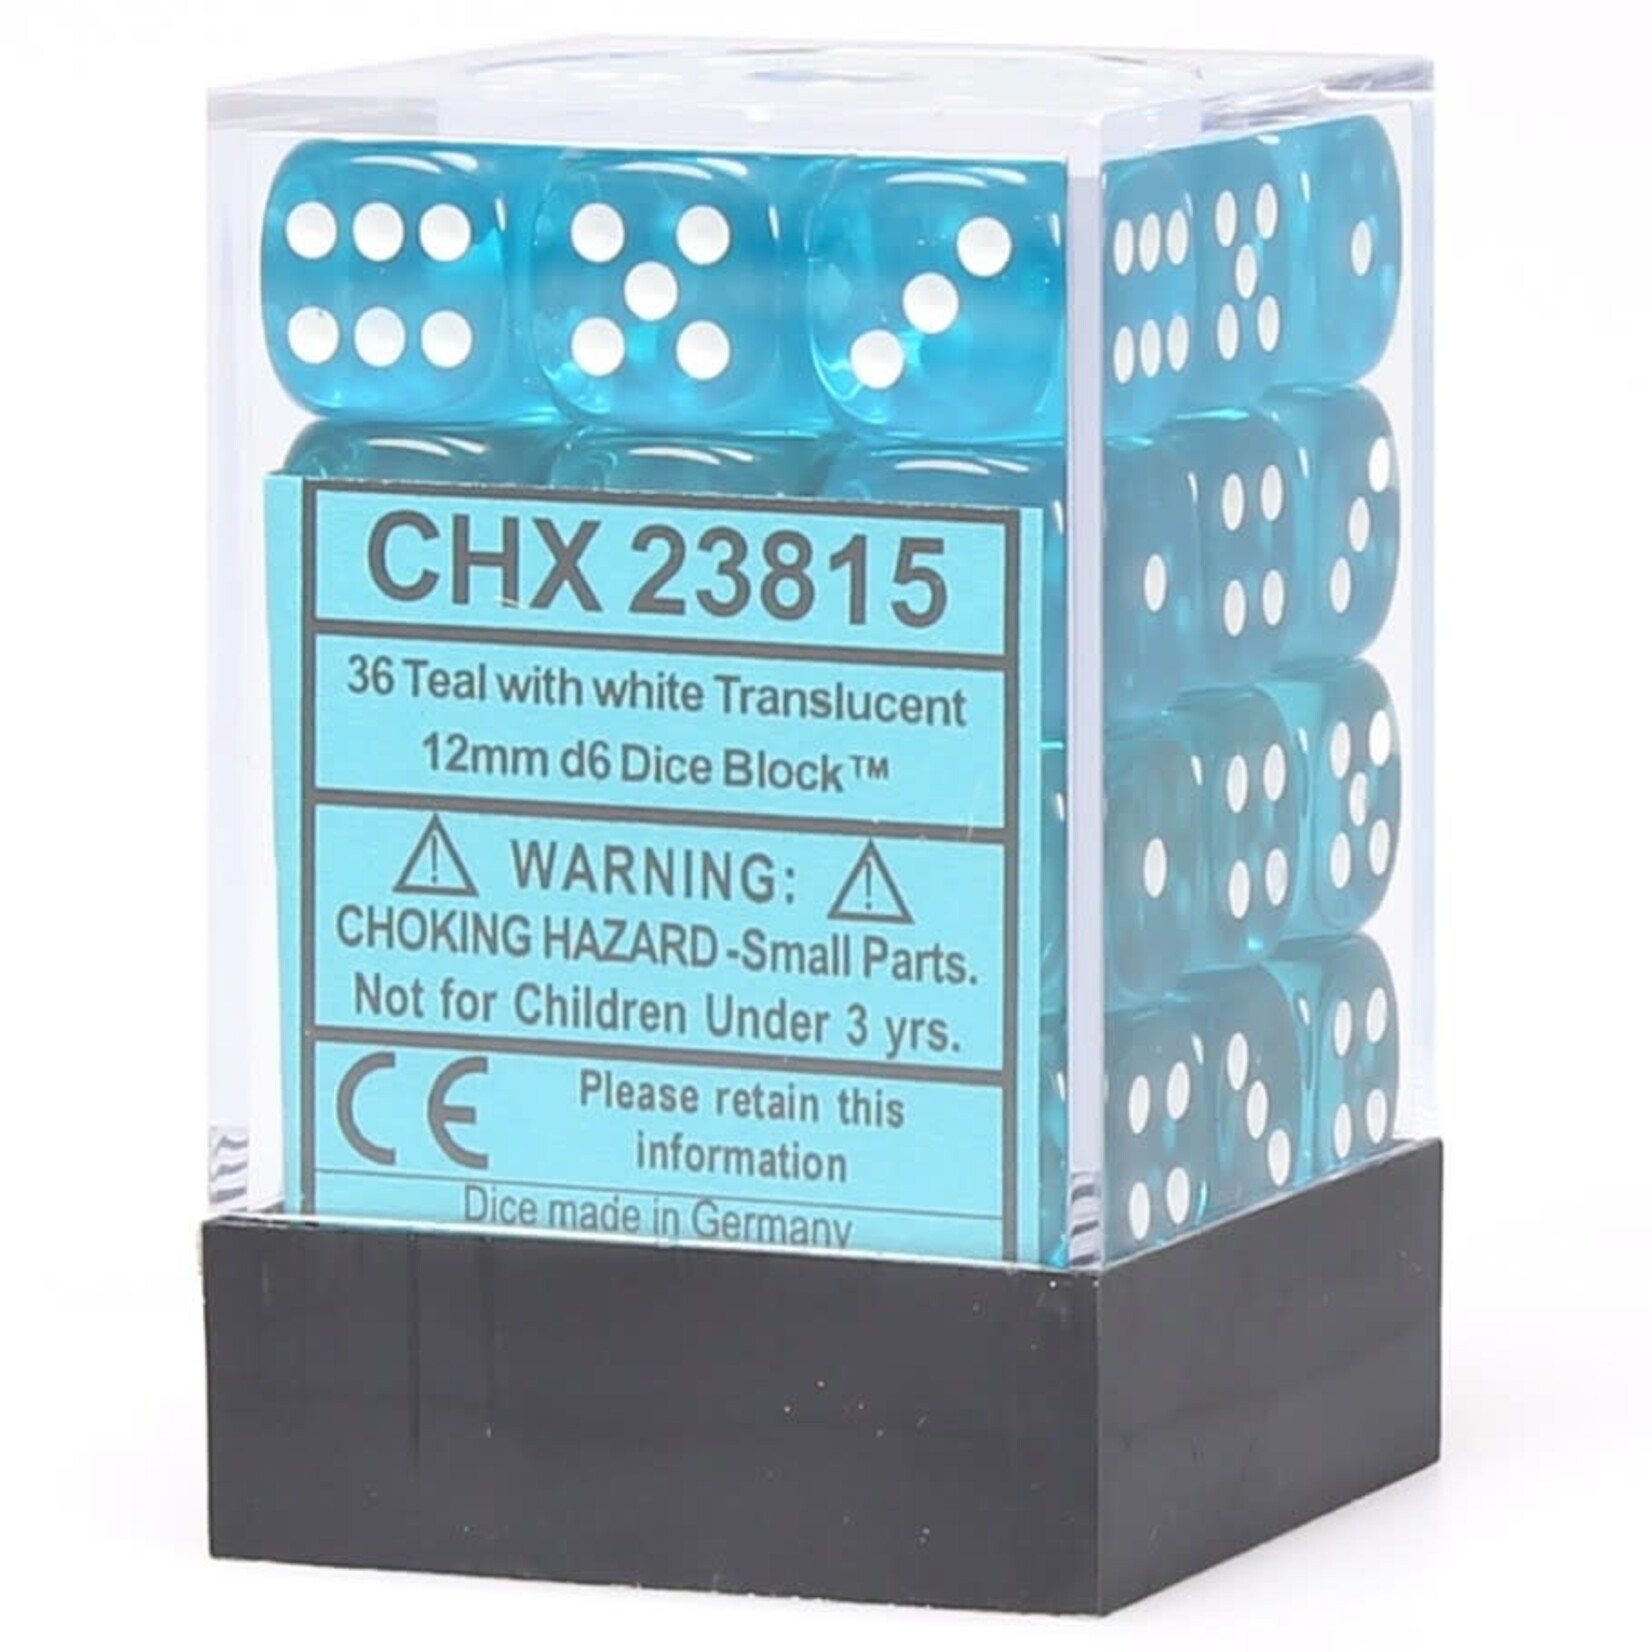 Chessex Translucent 12mm d6 Teal/white Dice Block™ (36 dice)